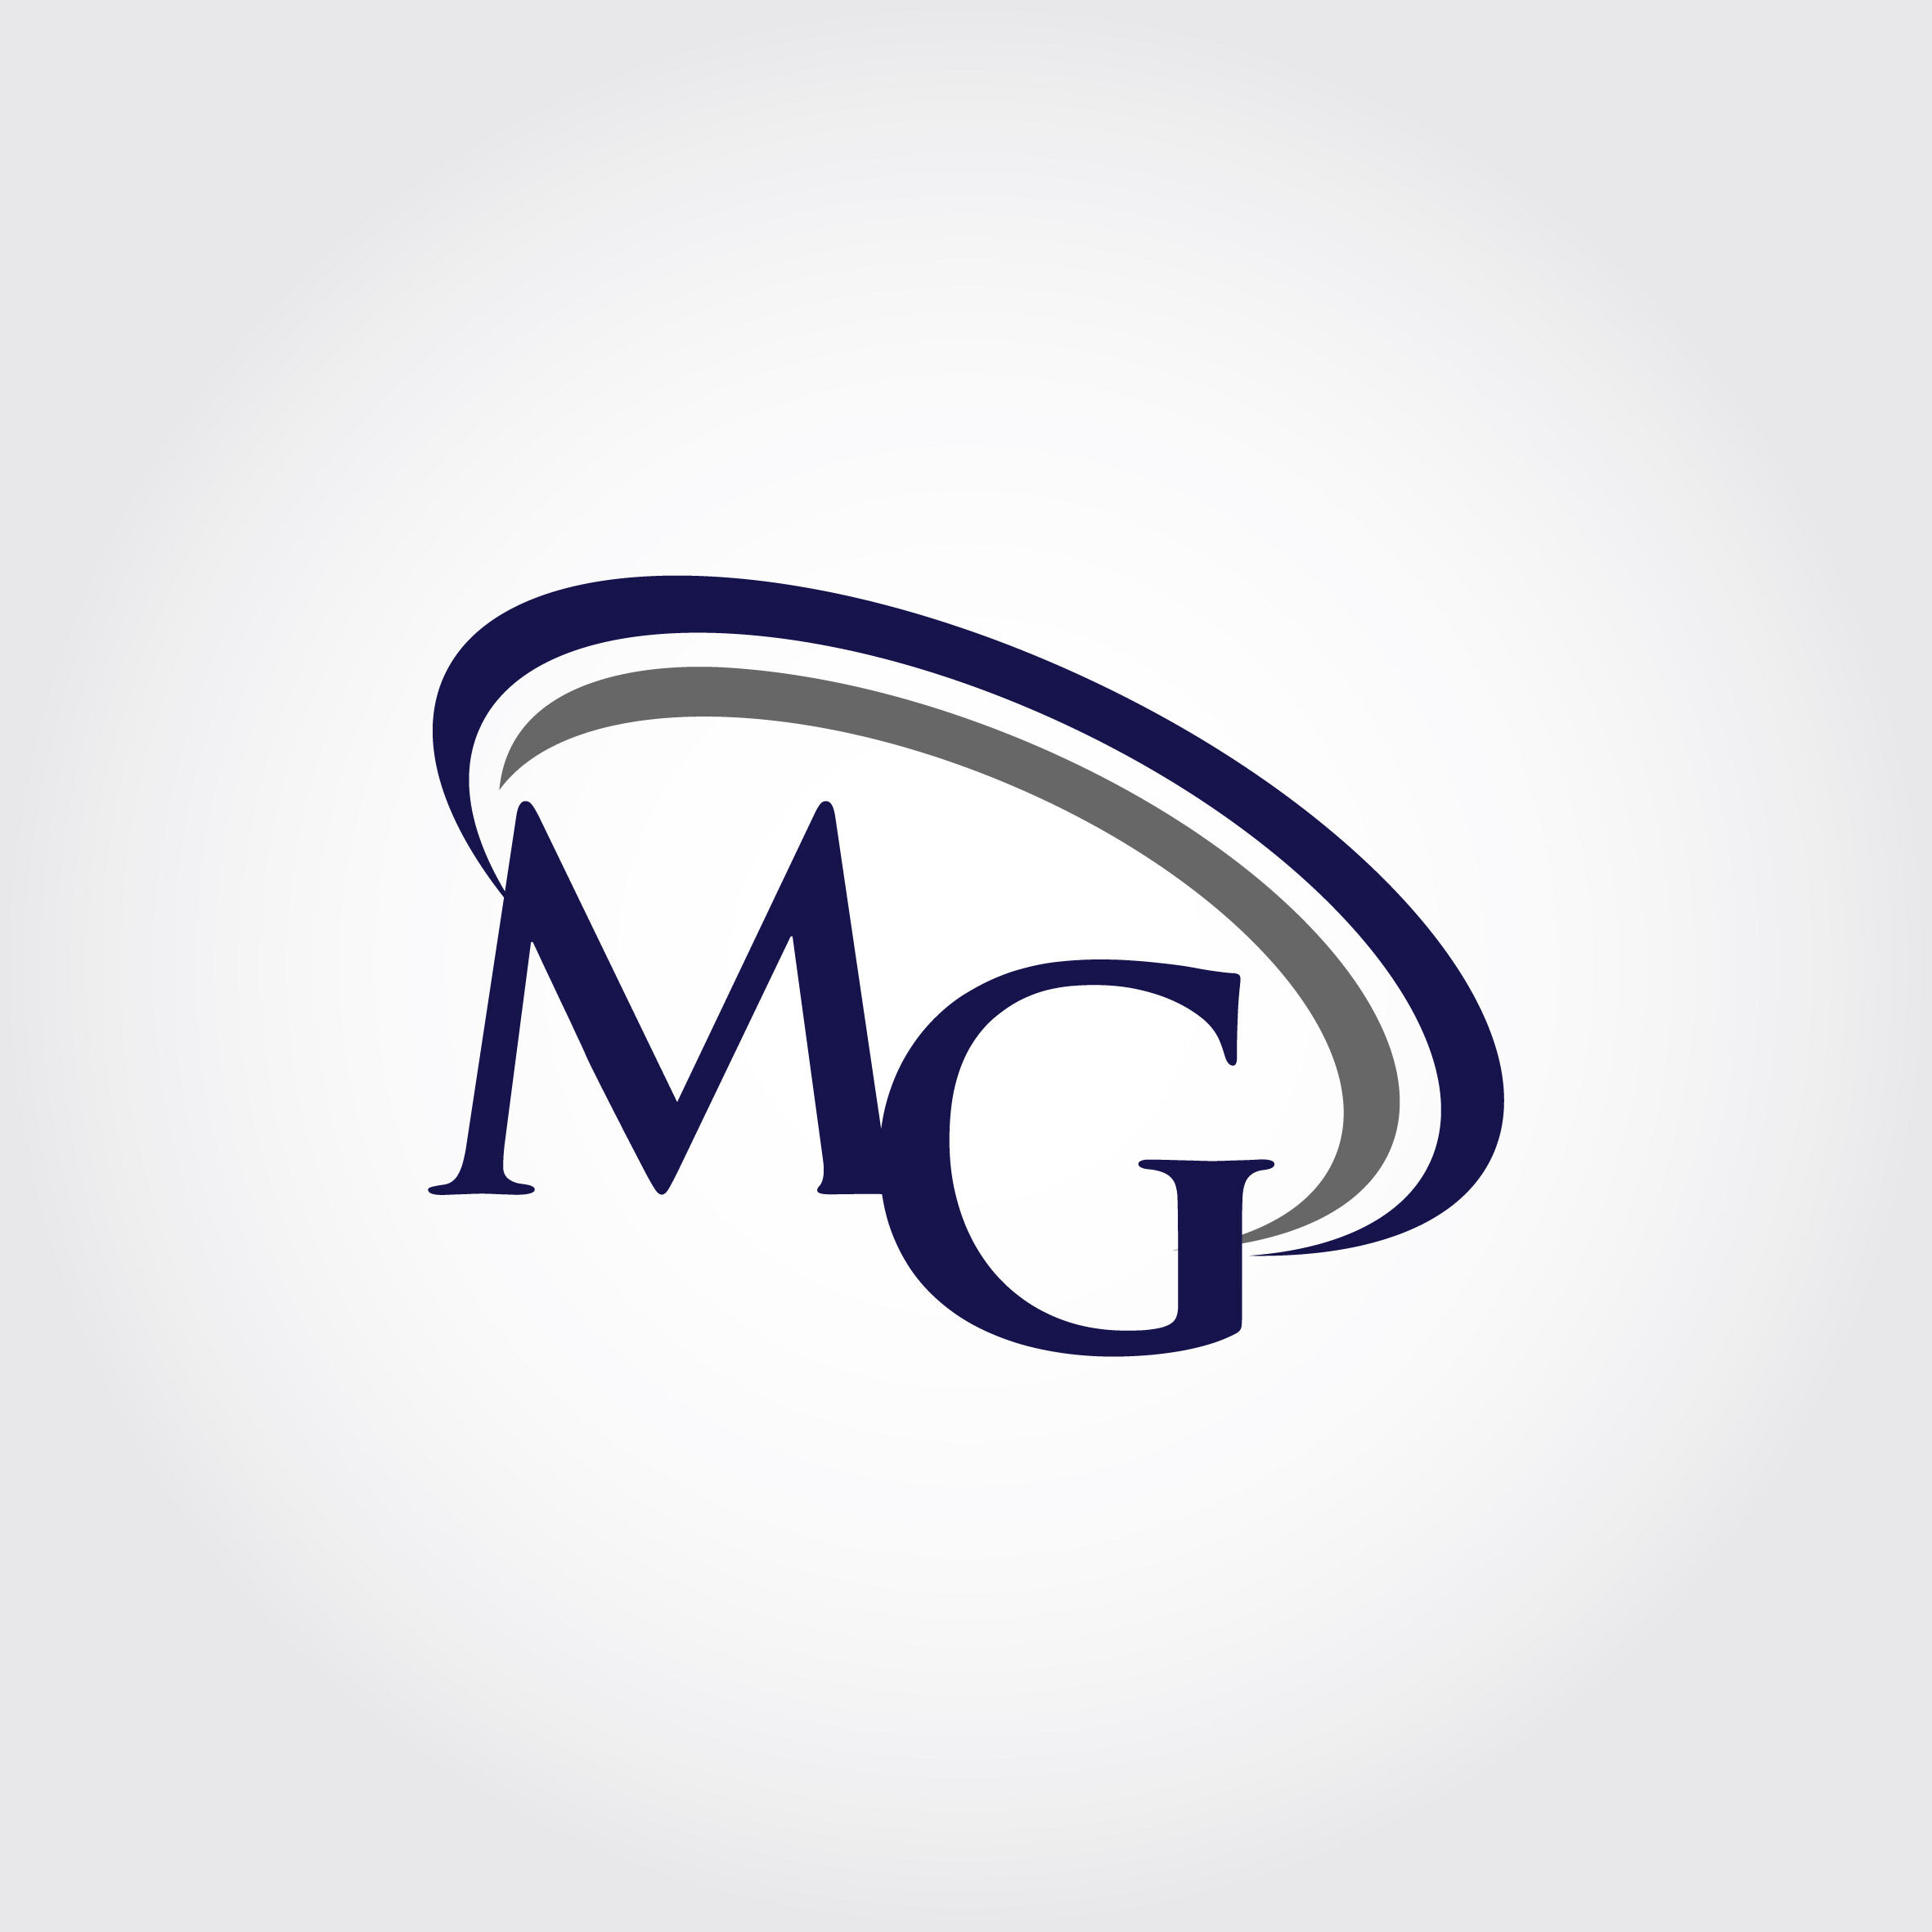 monogram mg logo design